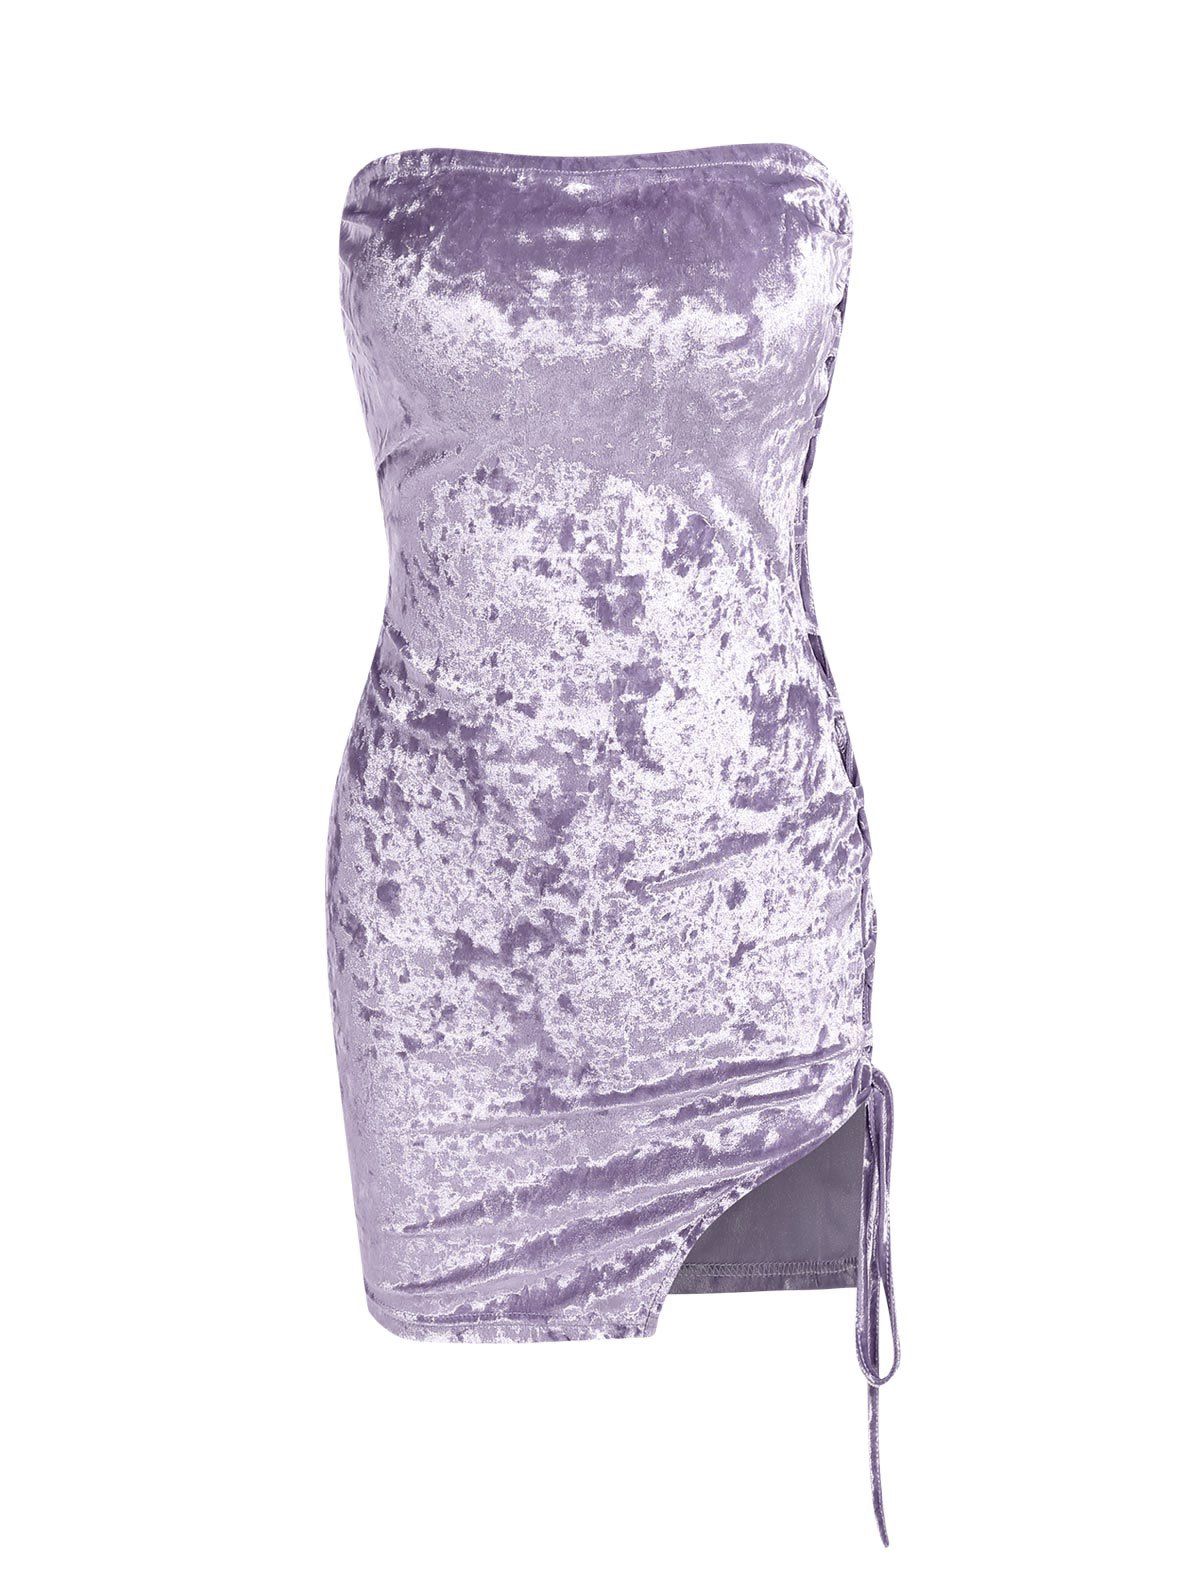 Strapless Lace-up Side Slit Velour Party Dress - LIGHT PURPLE S